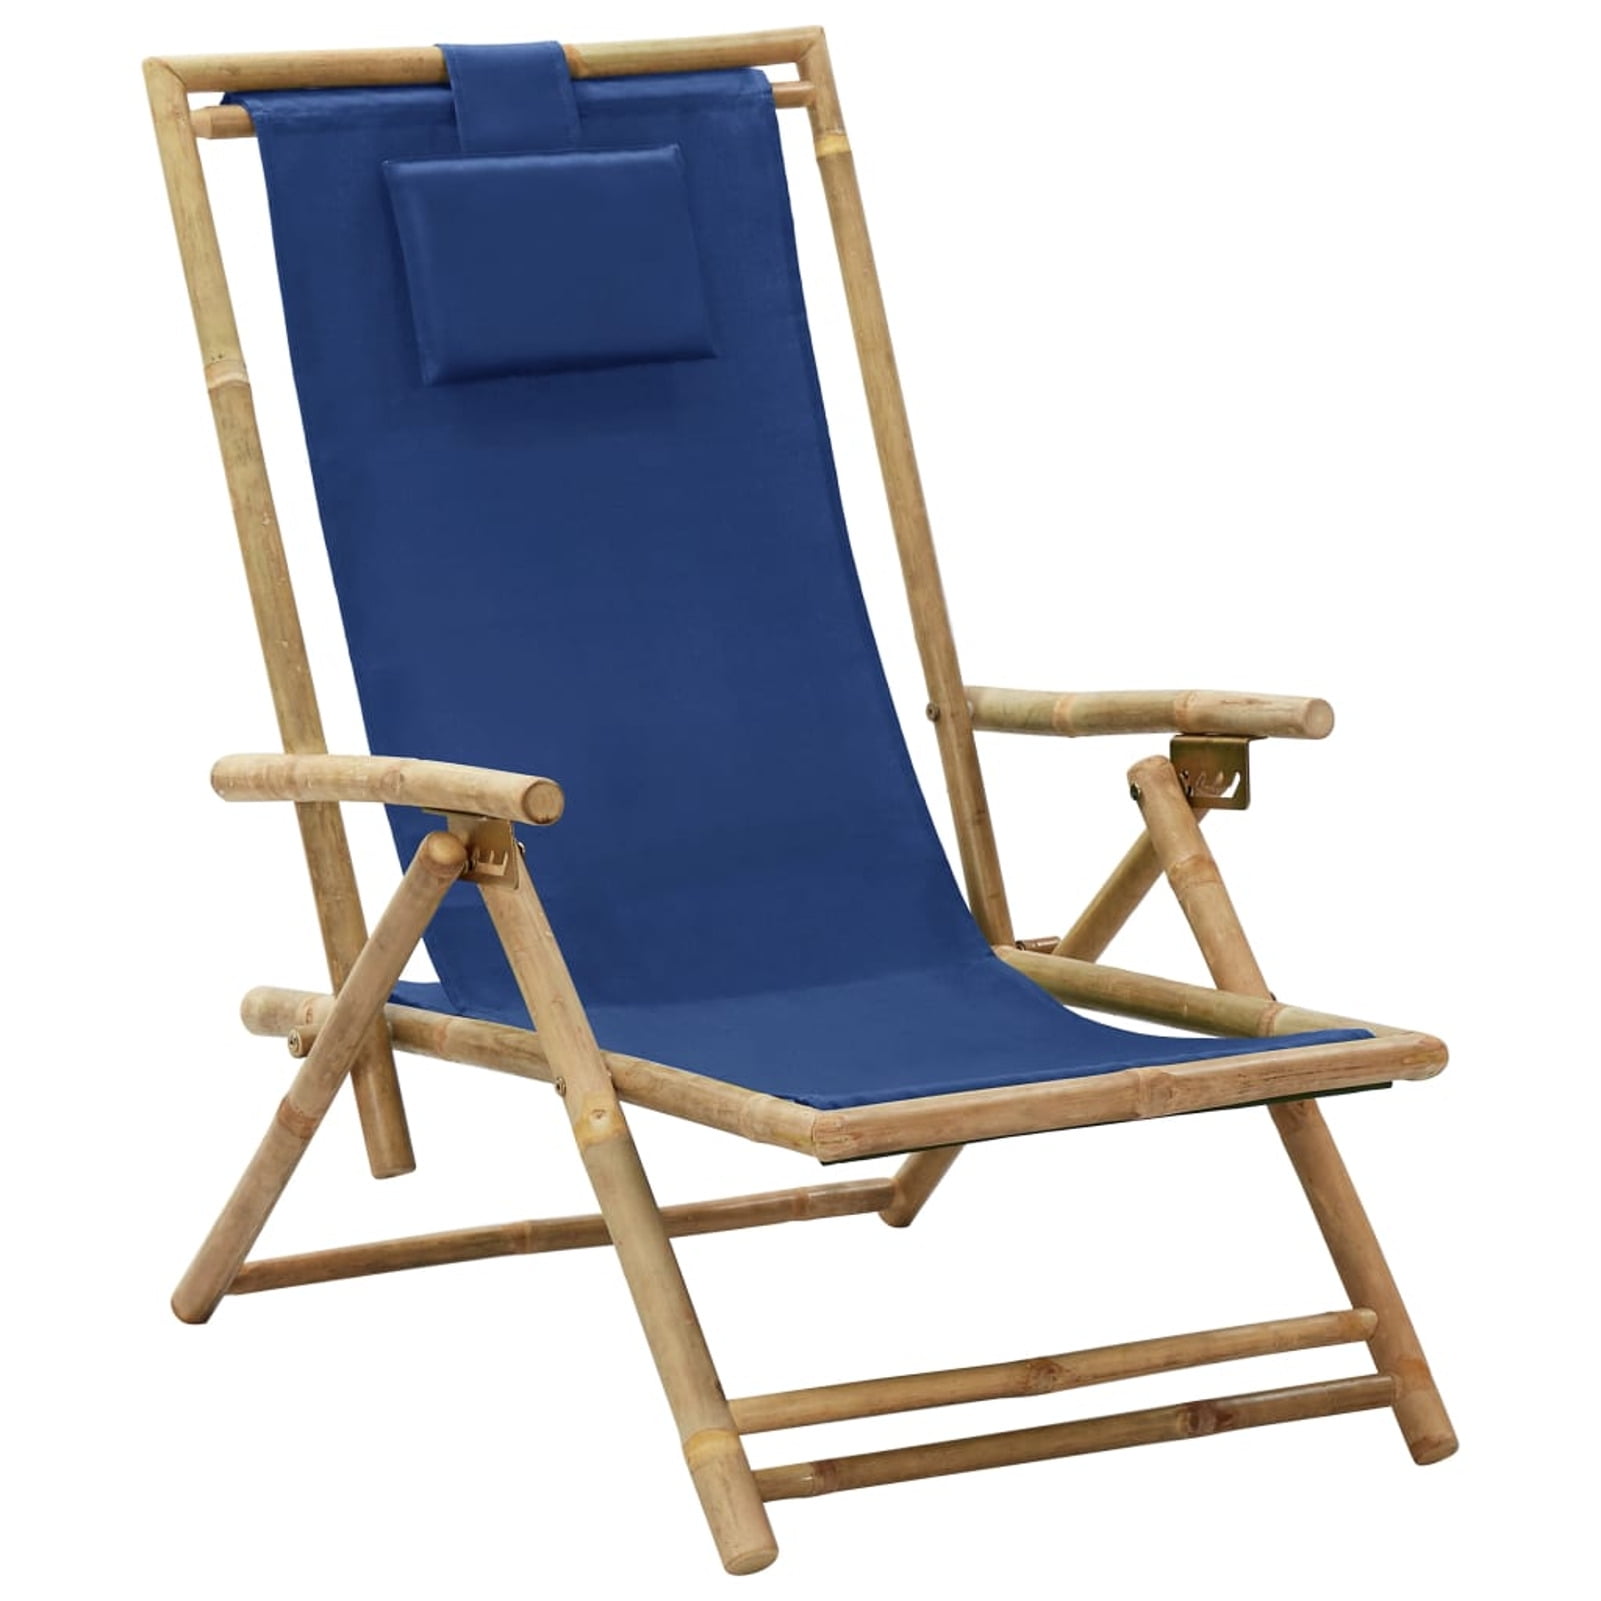 Details about   Vintage Blue White Aluminum Webbed Chaise Tri-Fold Lawn Lounge Chair Retro 